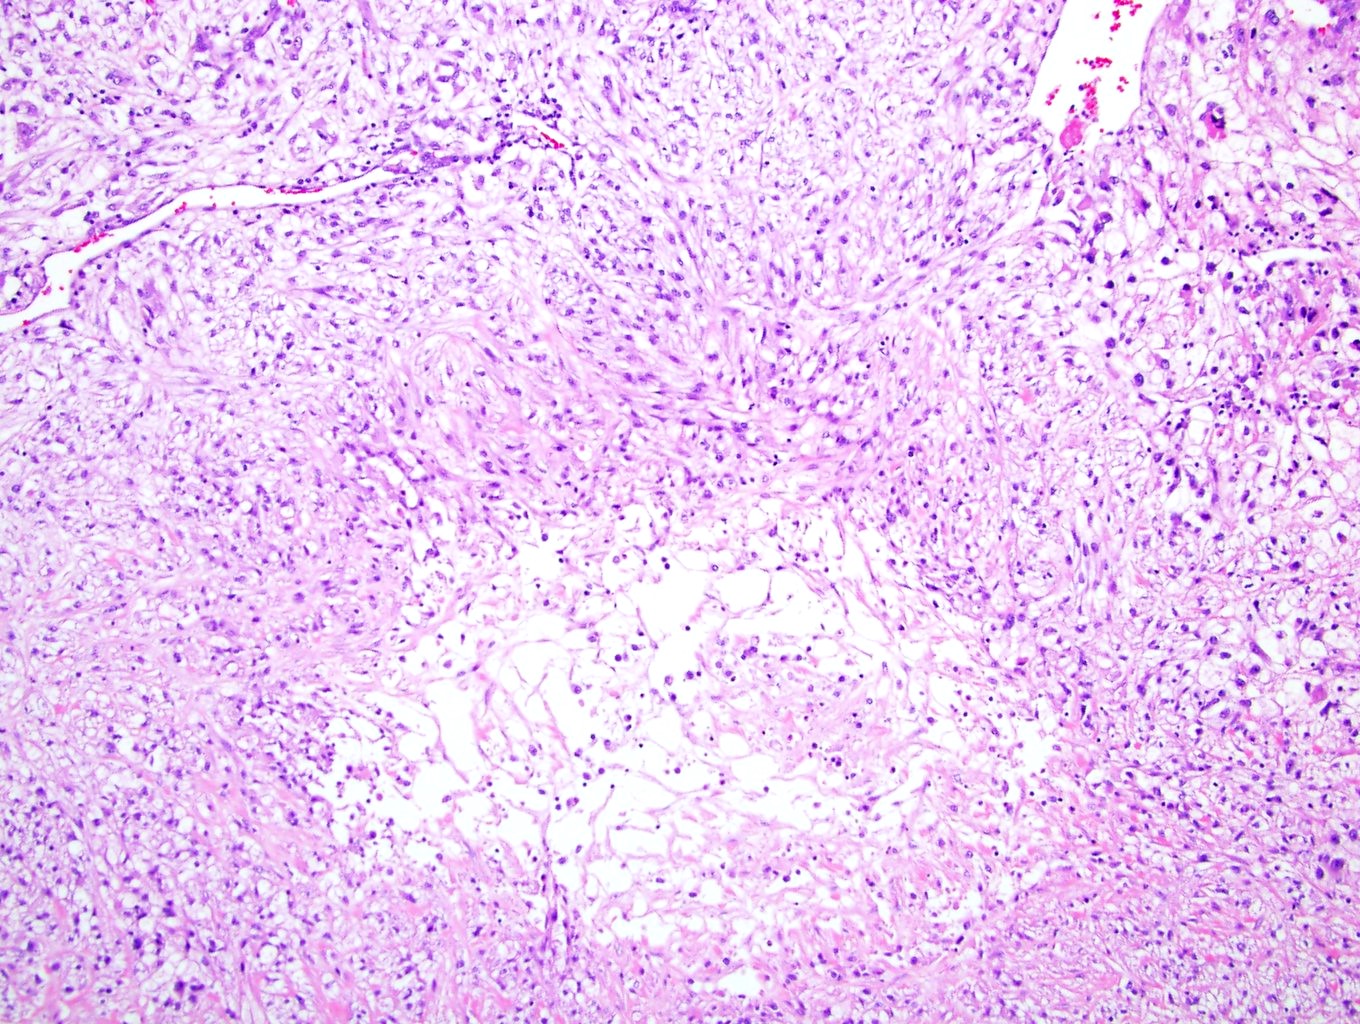 Coagulative tumor necrosis